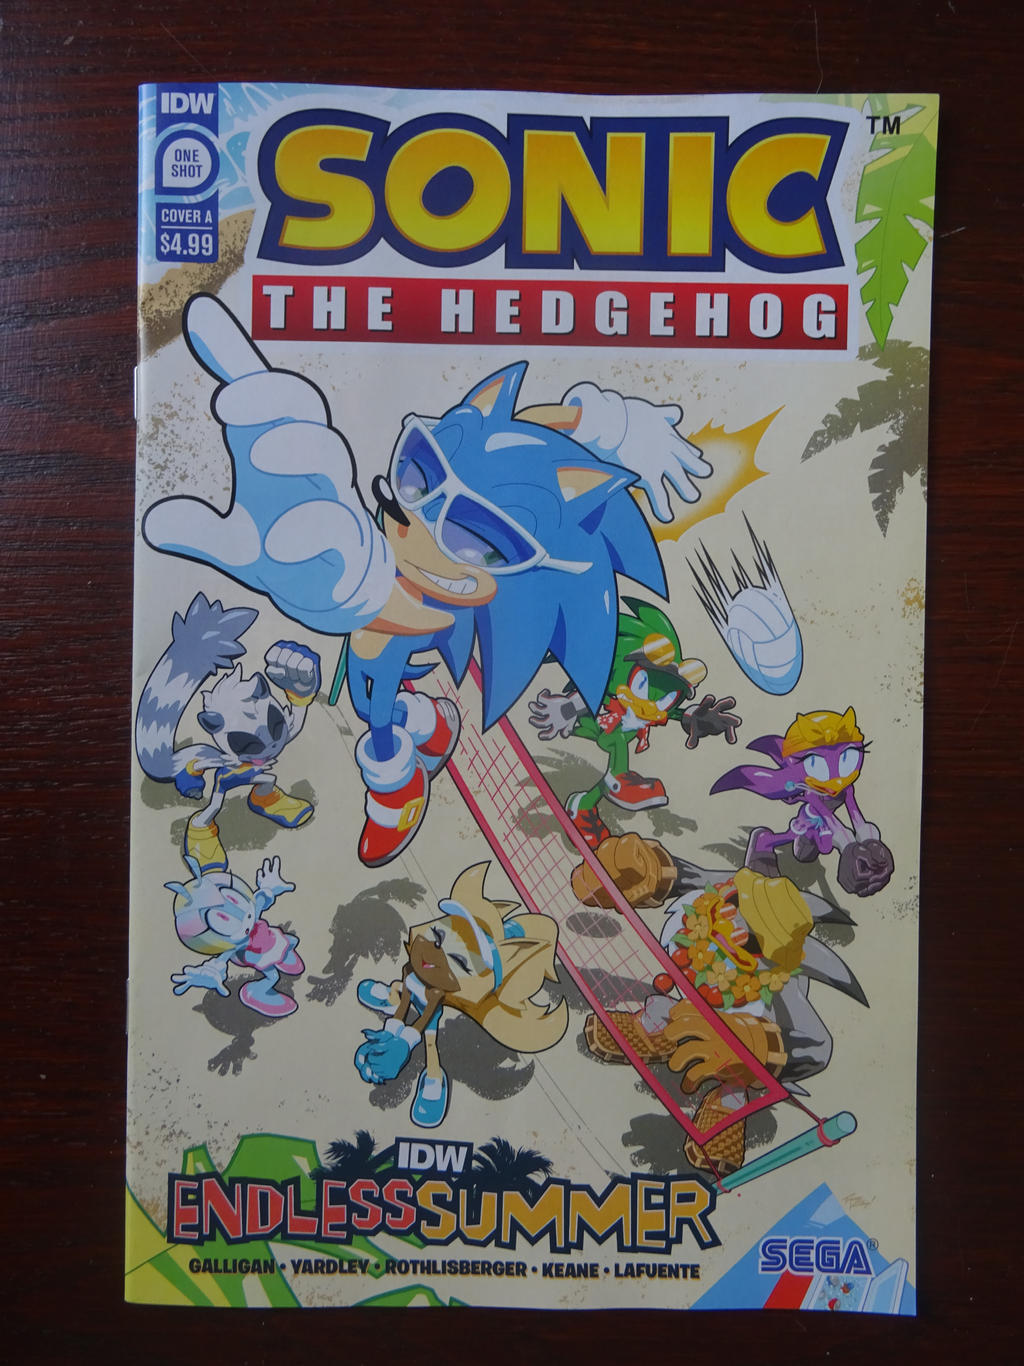 Browse Sonic.exe Comics - Comic Studio